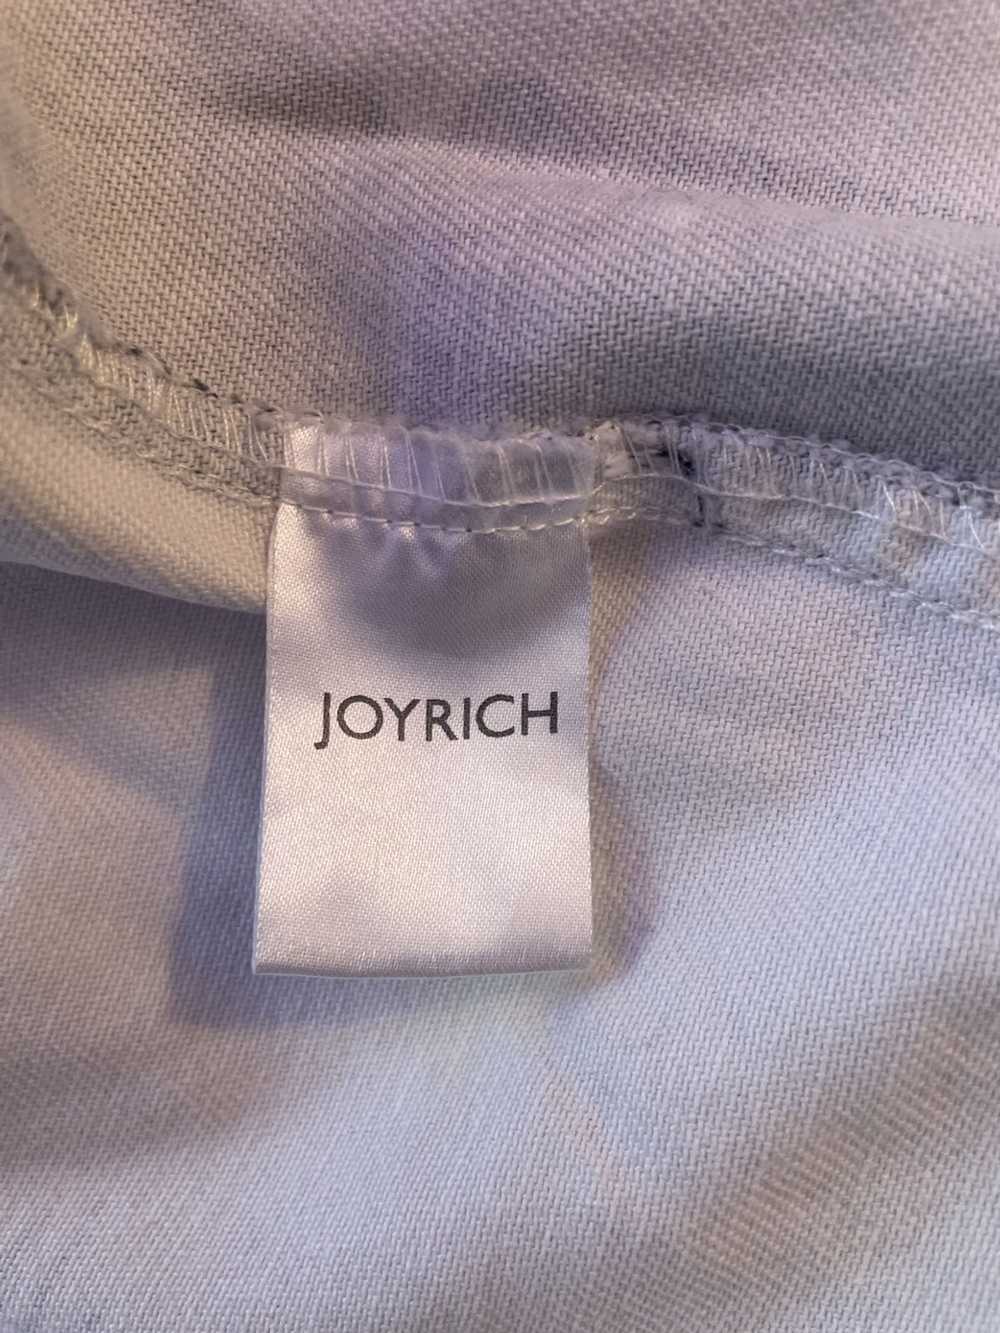 Joyrich Joyrich Maripol Collage City Jacket - image 3